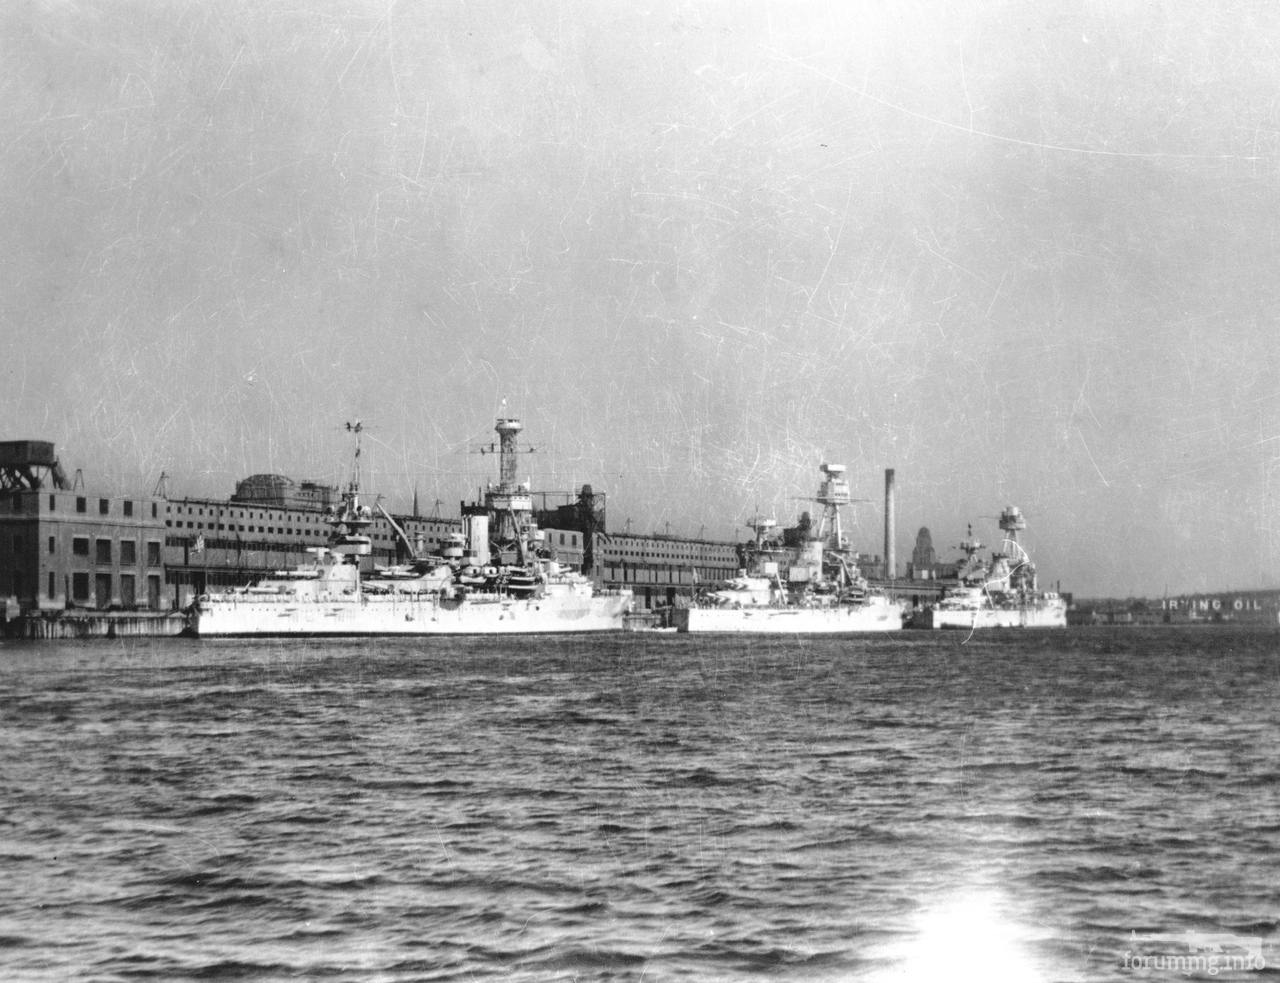 126444 - Линкоры USS Arkansas (BB-33), USS Texas (BB-35) и USS New York (BB-34) в Галифаксе, 17 июня 1939 г.